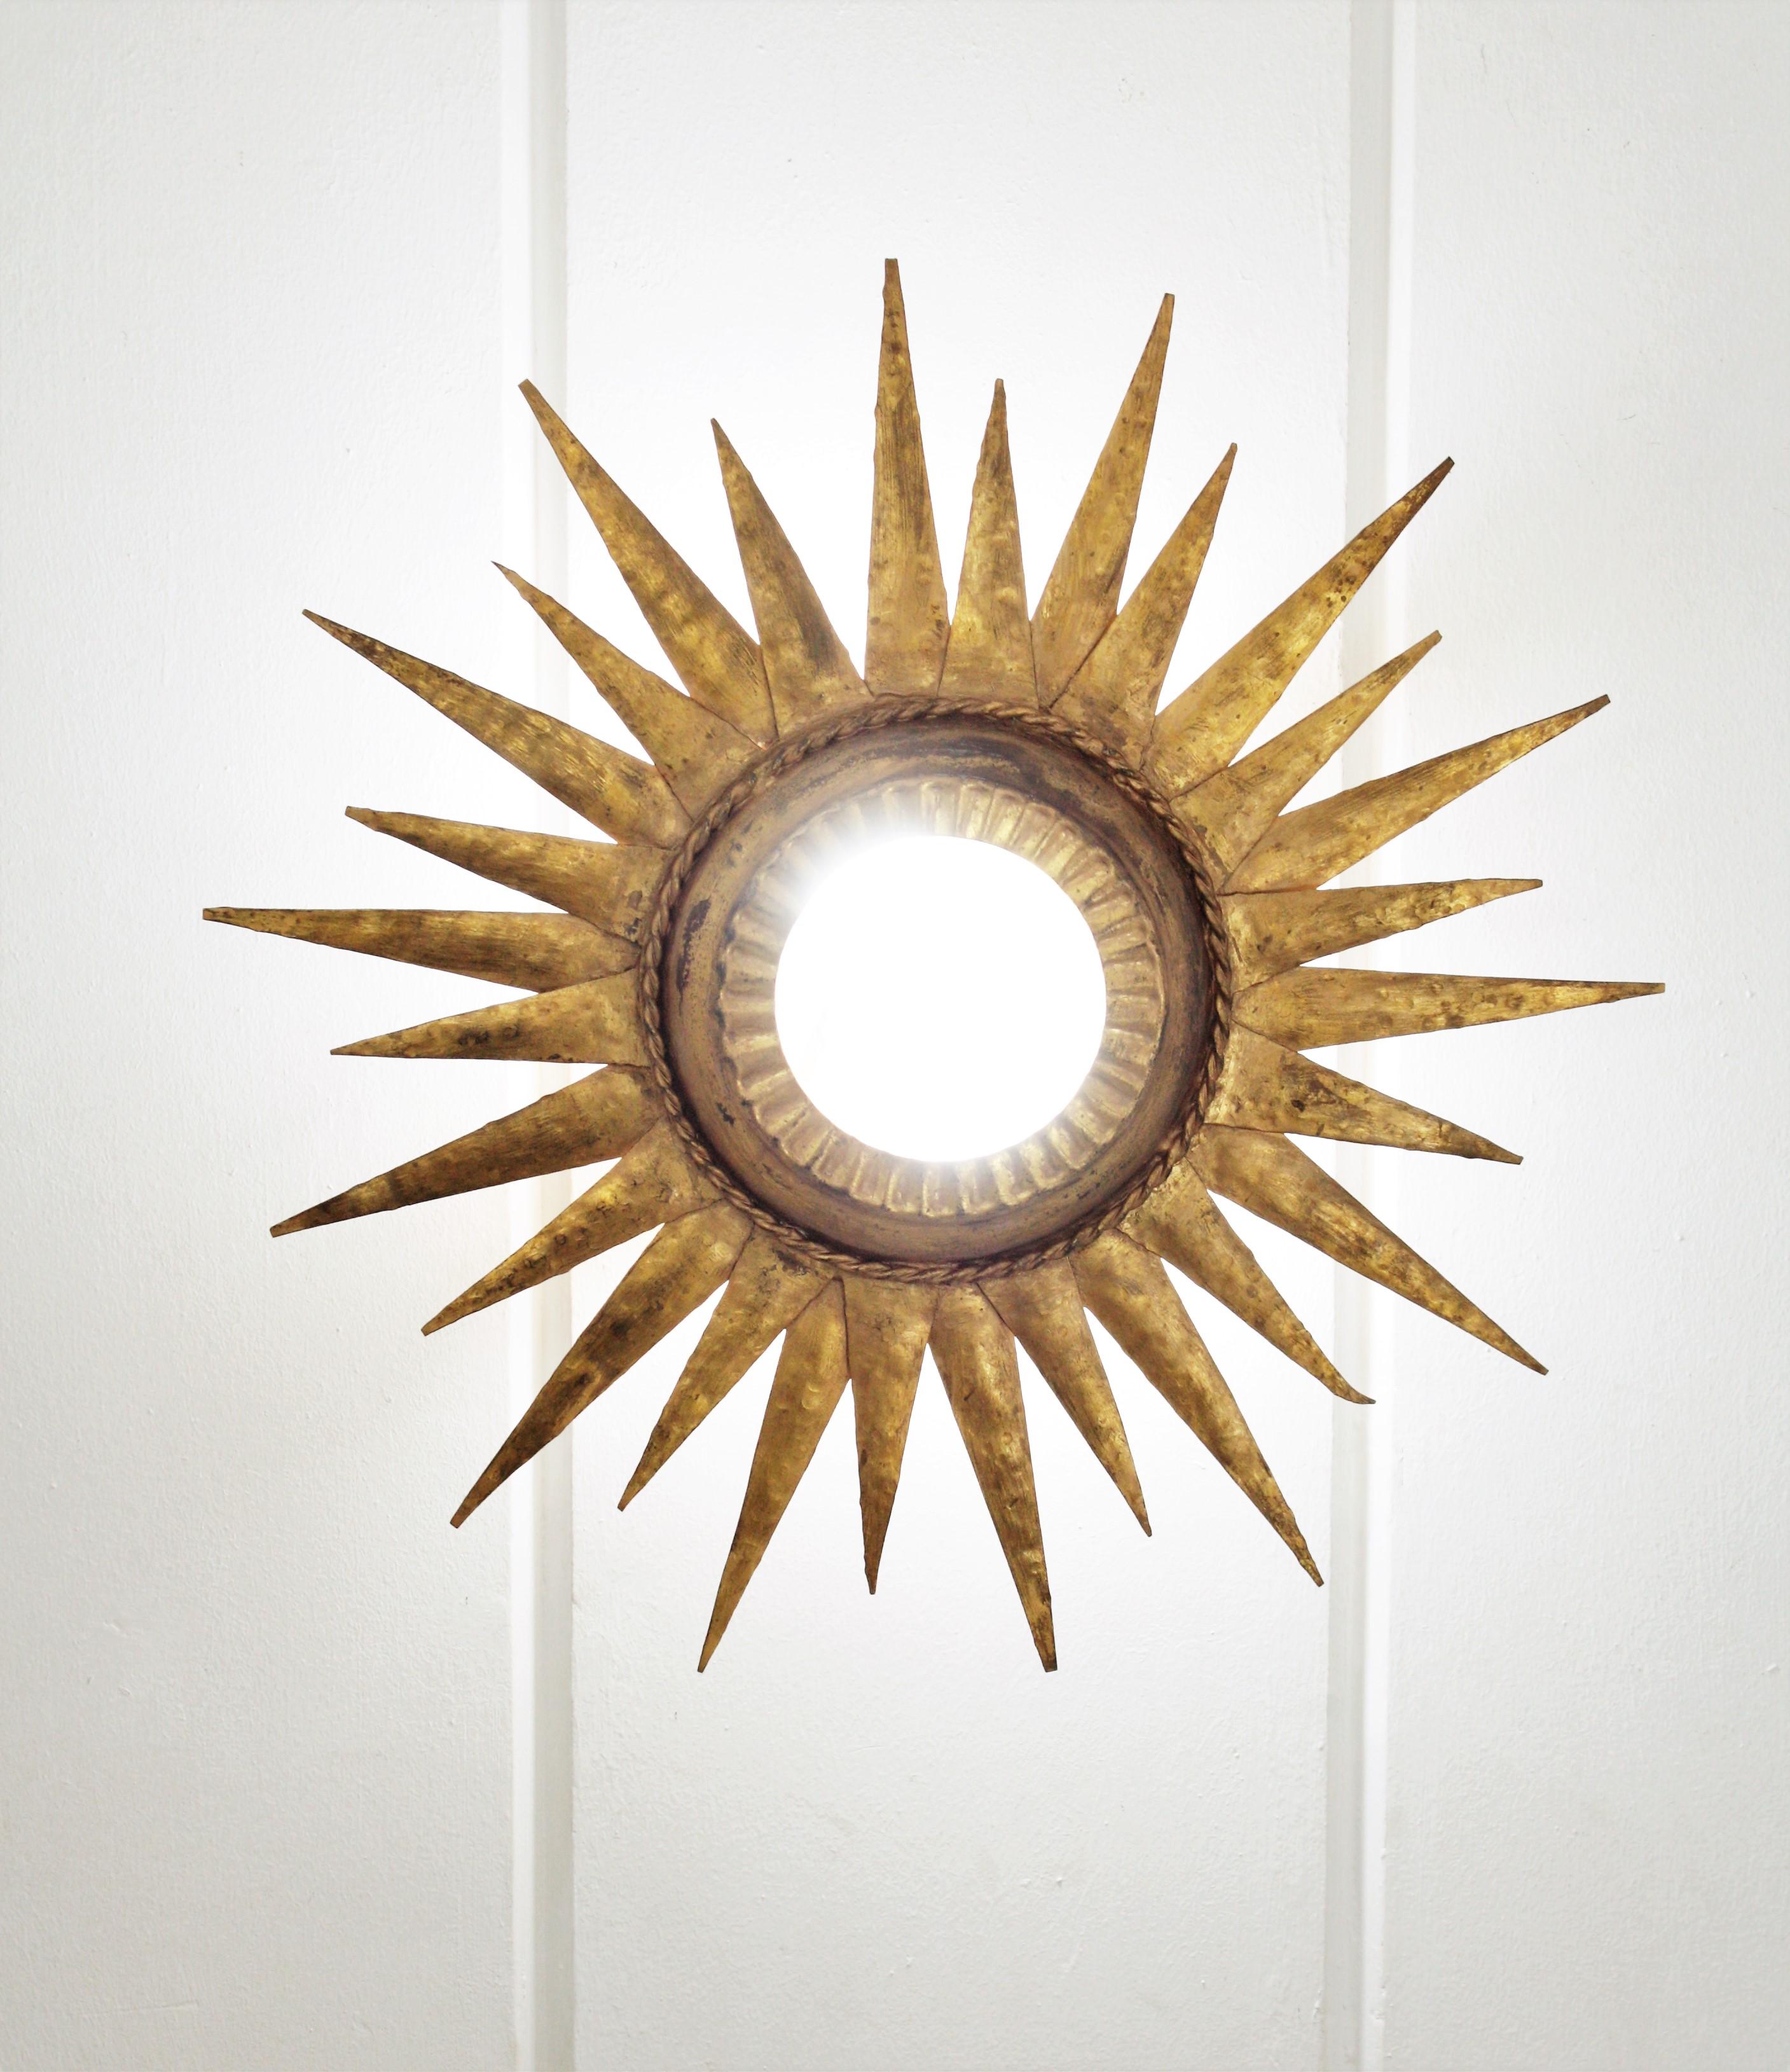 Spanish Sunburst Ceiling Light Fixture or Wall Sconce / Sunburst Mirror,  Gilt Iron